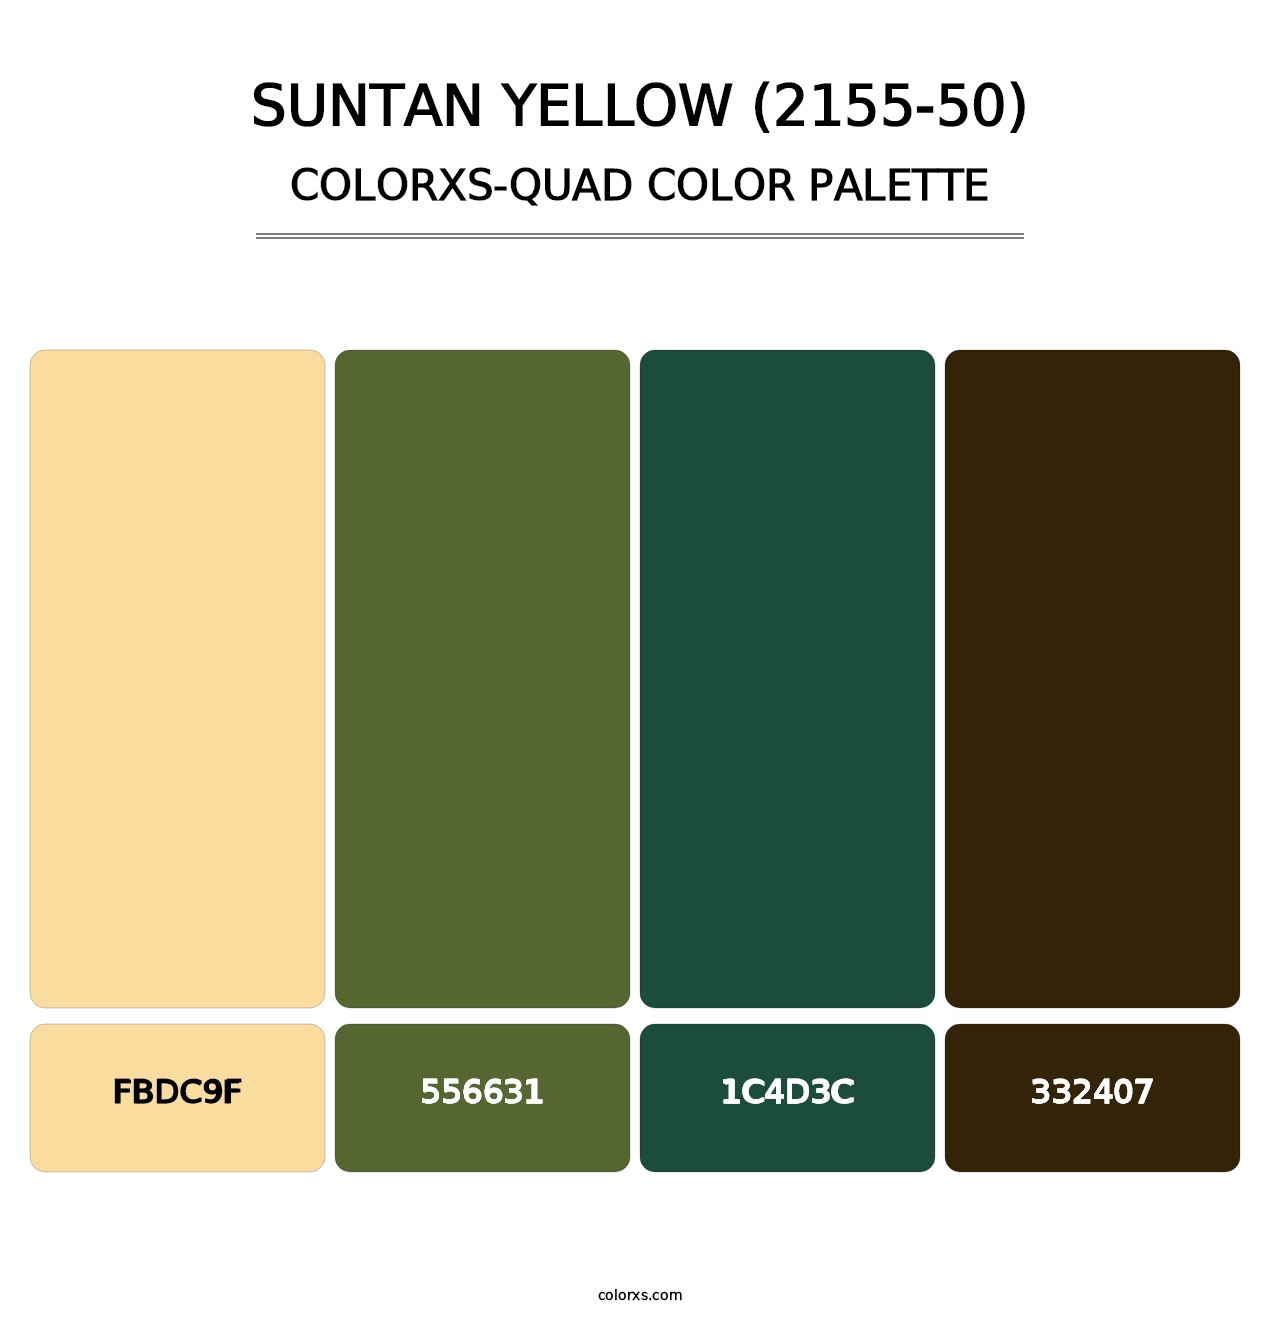 Suntan Yellow (2155-50) - Colorxs Quad Palette